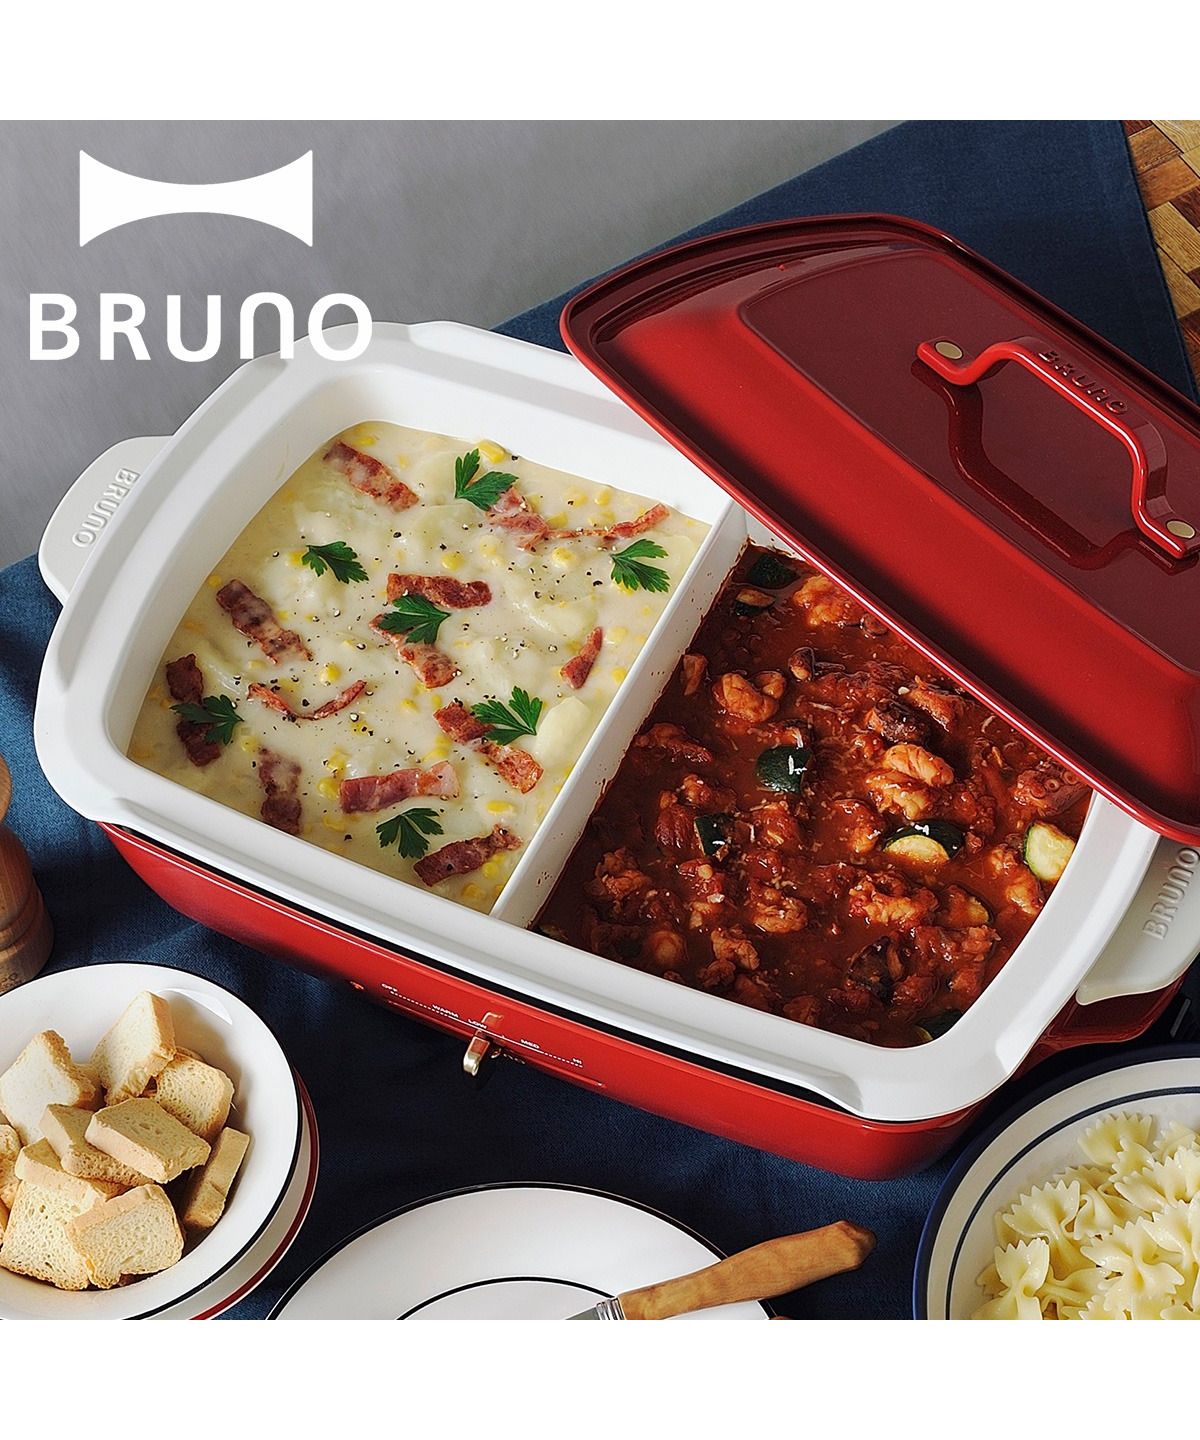 BRUNO ブルーノ　ホットプレート グランデ　シダーベージュ 調理機器 公式直営